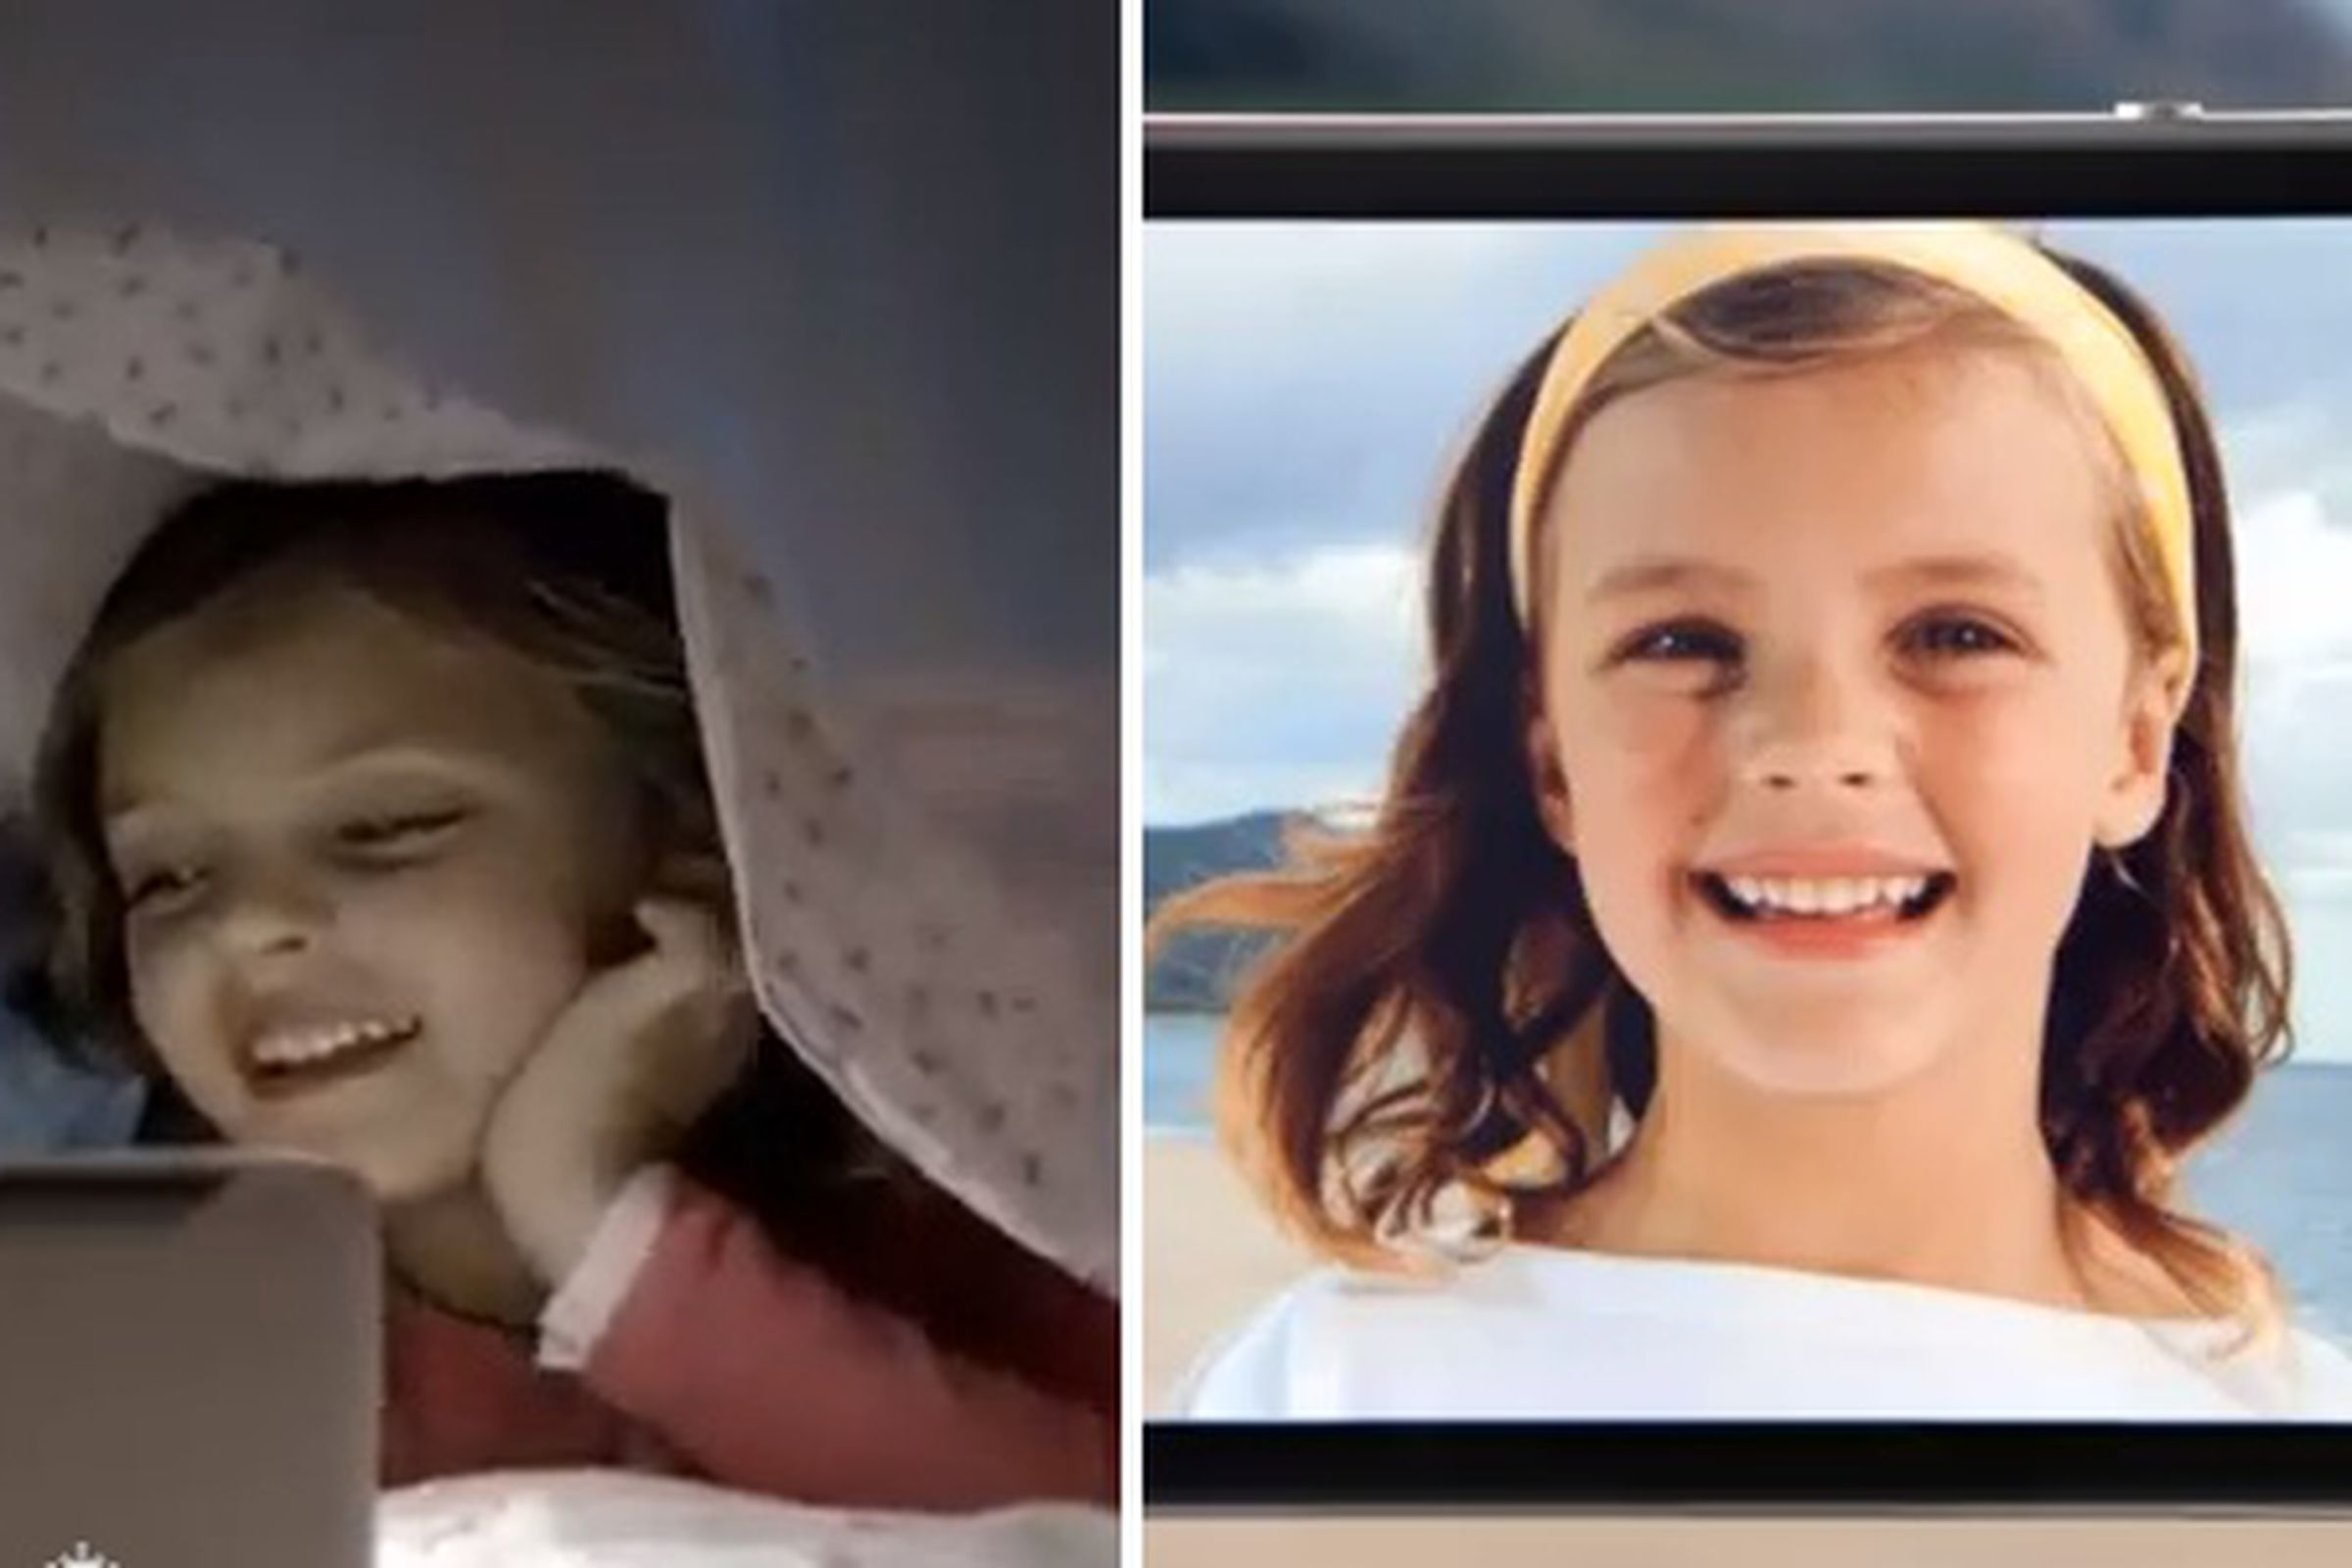 Samsung Apple ad child actress